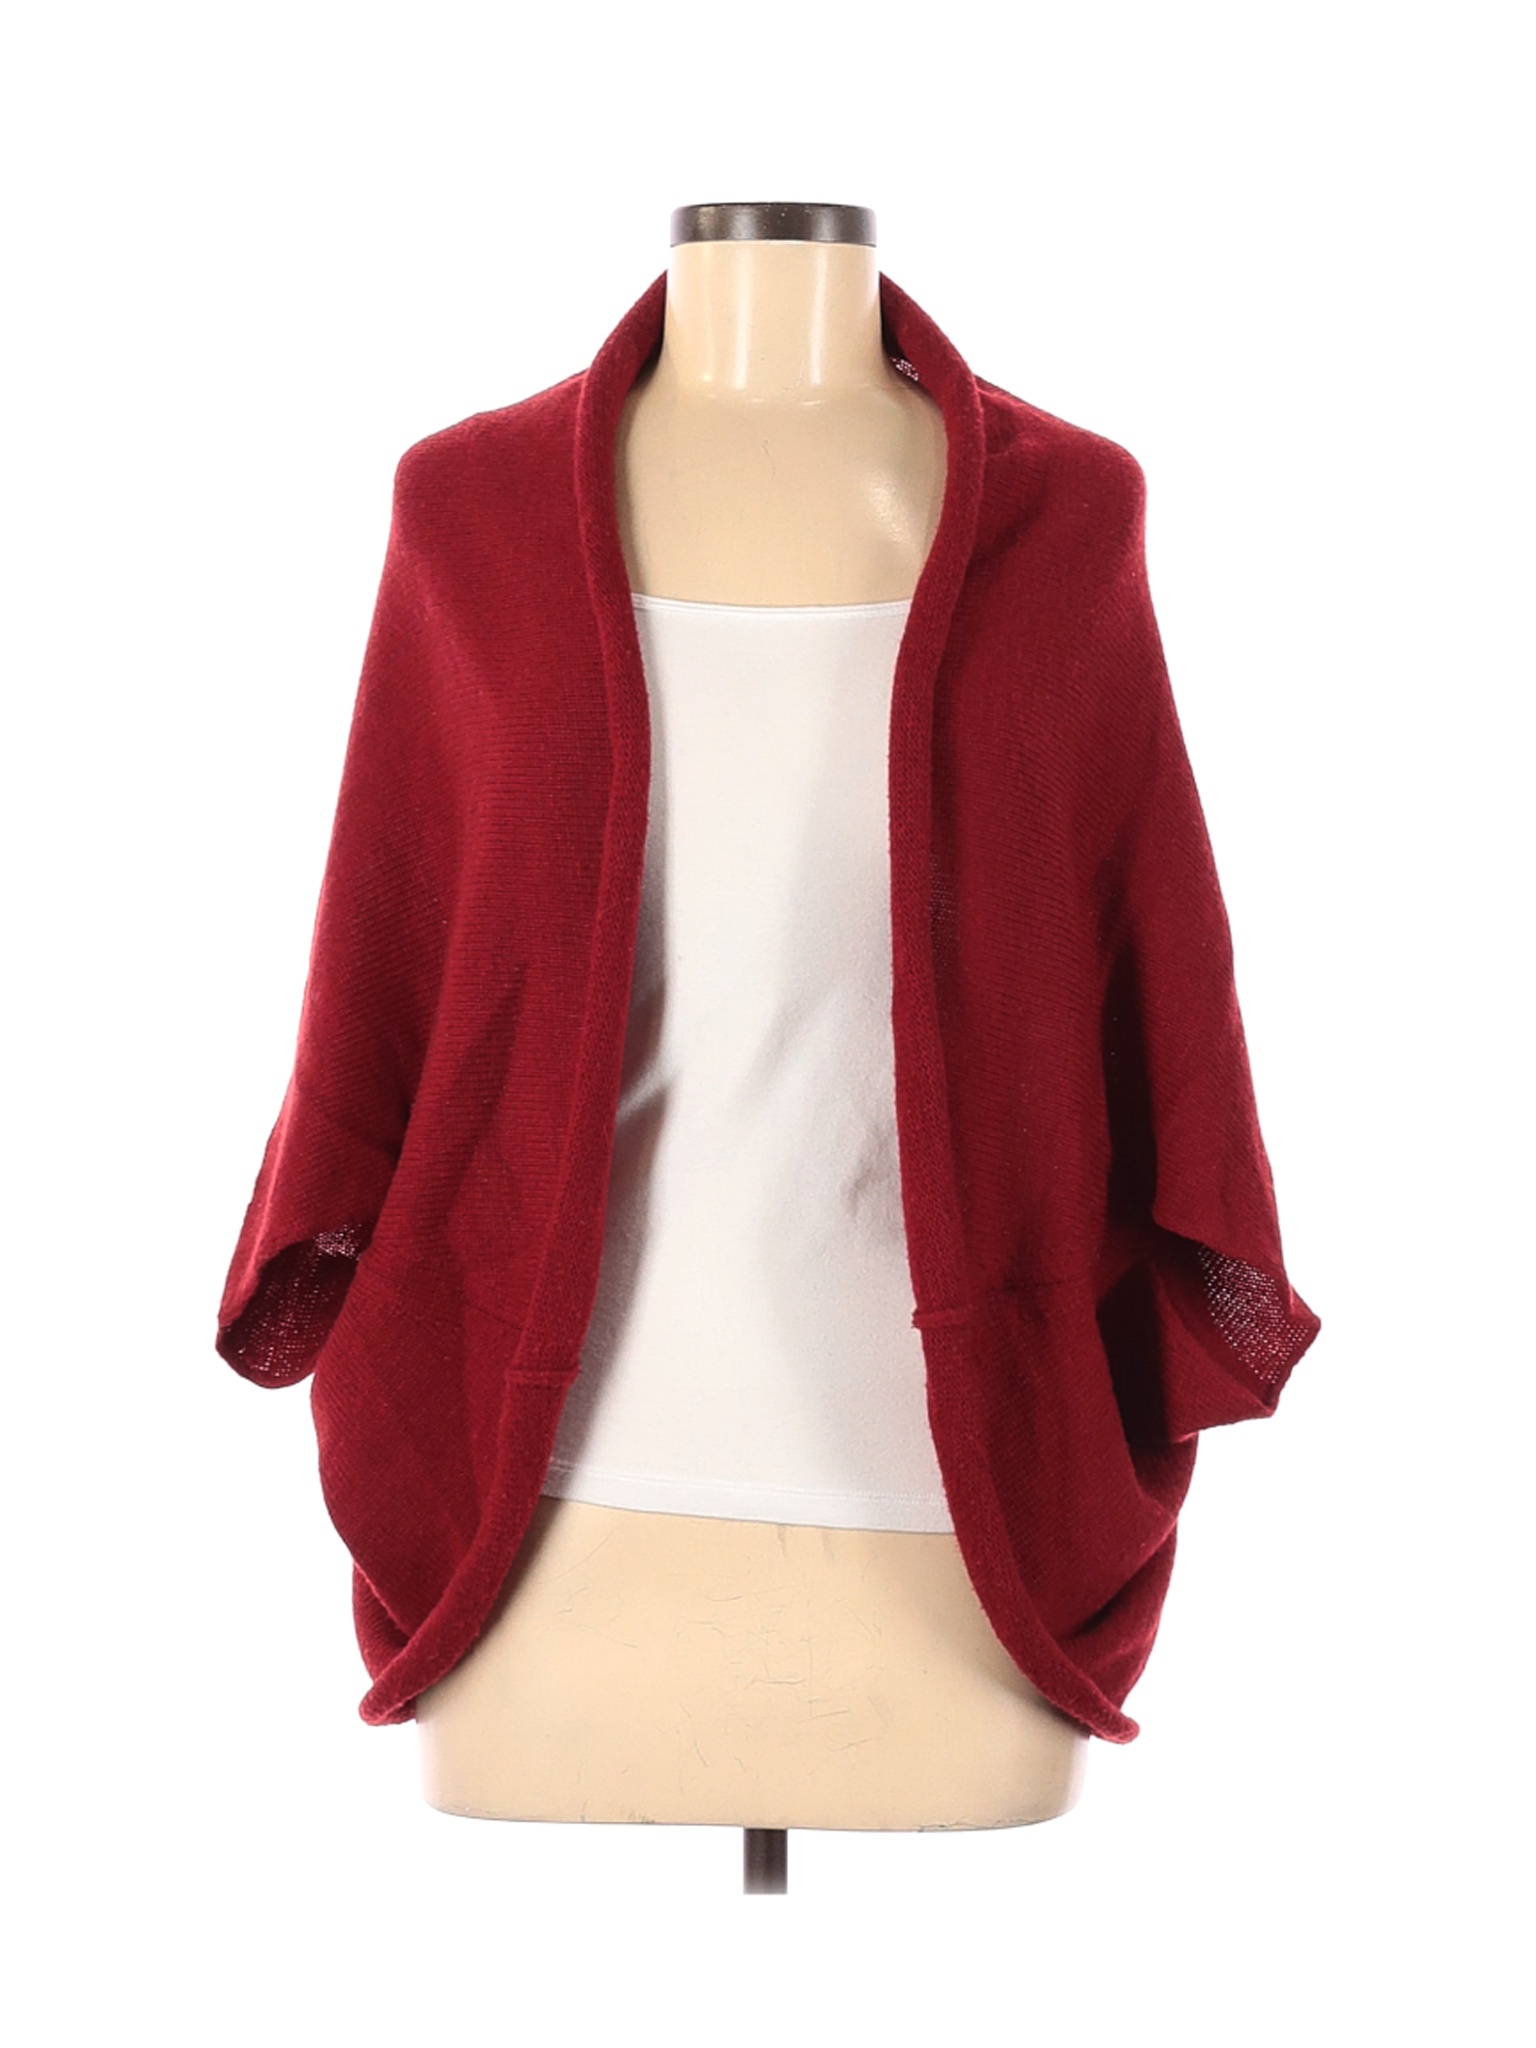 Zara Women Red Cardigan M | eBay